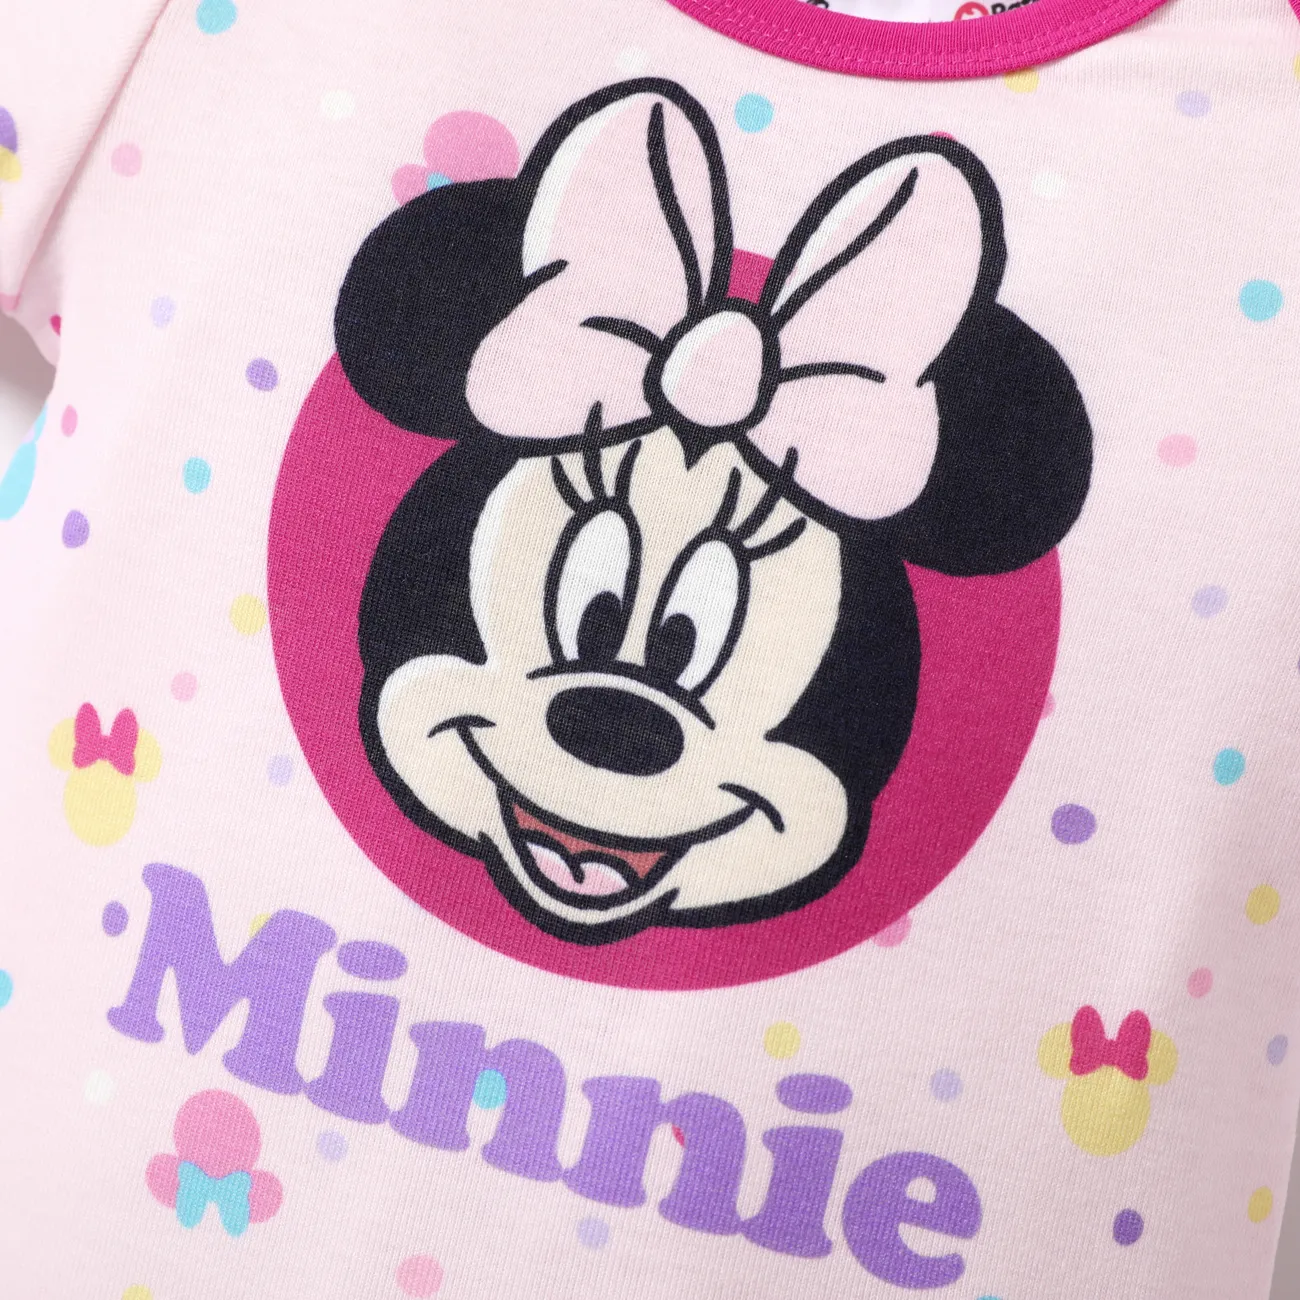 Disney Mickey and Friends Baby Girls/Boys Naia™ Character Print Polka Dot Romper with Pants Set Pink big image 1